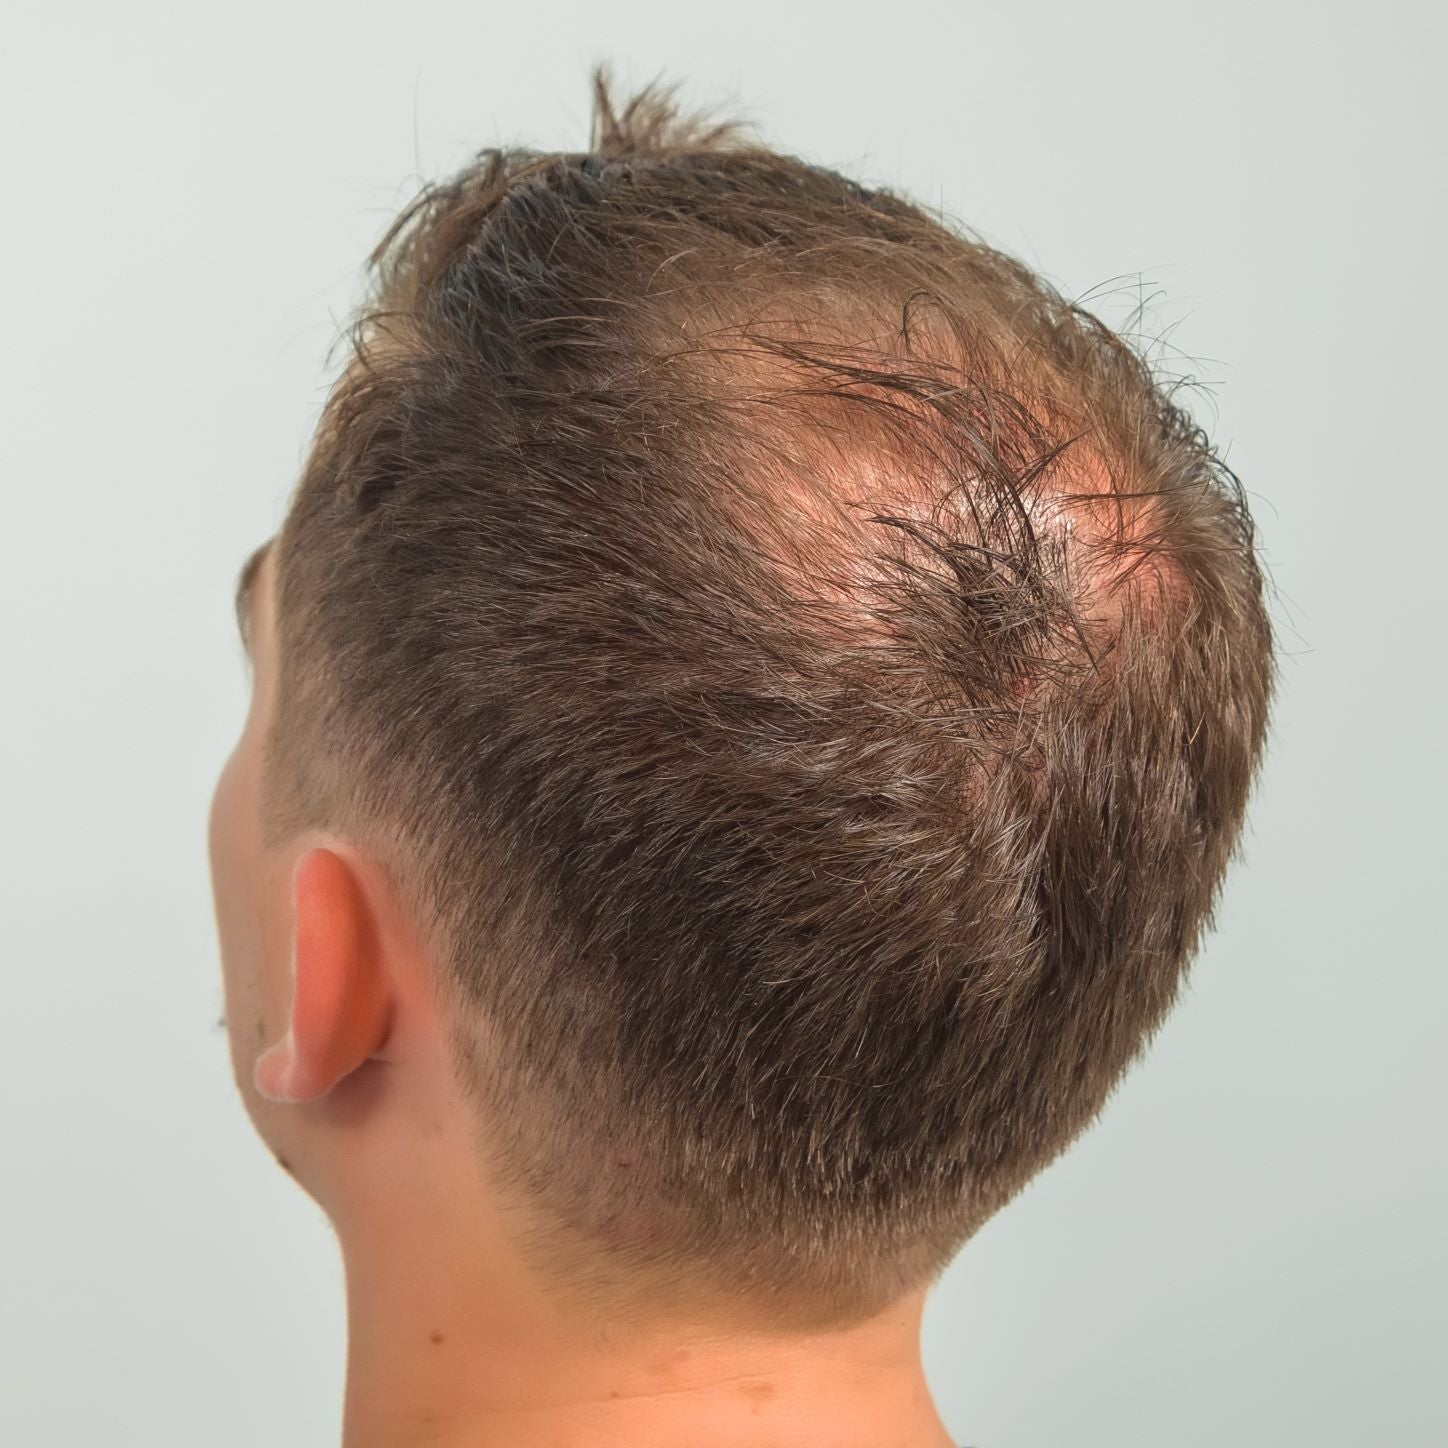 Risk of Premature Balding Found in Genes of Short Men